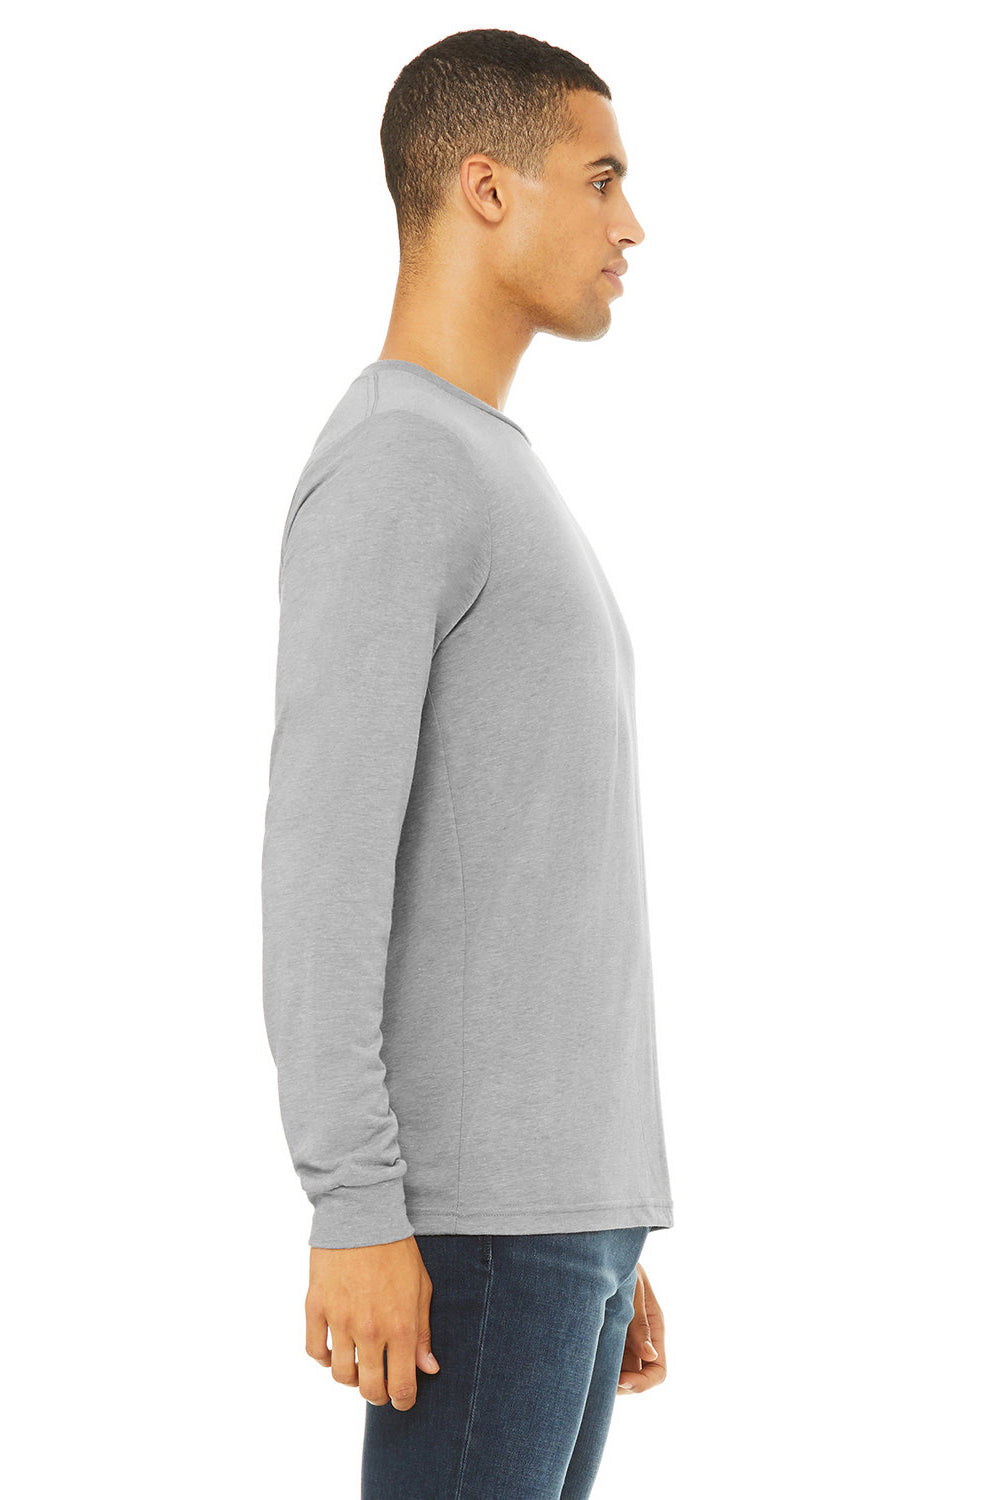 Bella + Canvas BC3501/3501 Mens Jersey Long Sleeve Crewneck T-Shirt Heather Grey Triblend Model Side